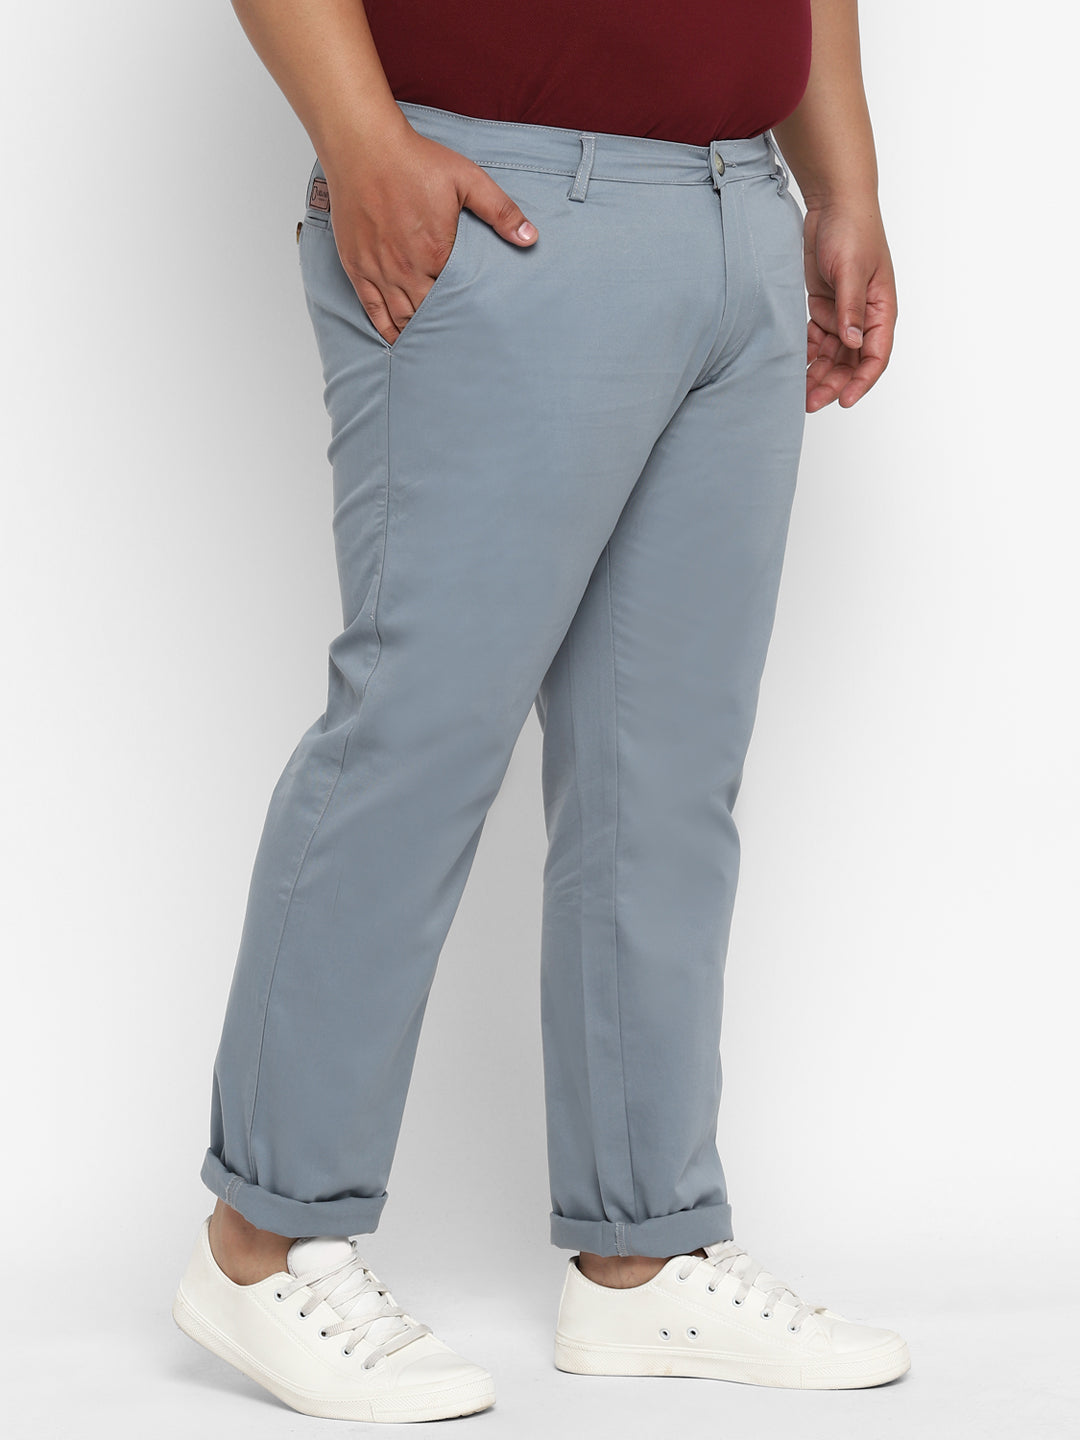 Plus Men's Light Blue Cotton Regular Fit Casual Chino Pants Stretch